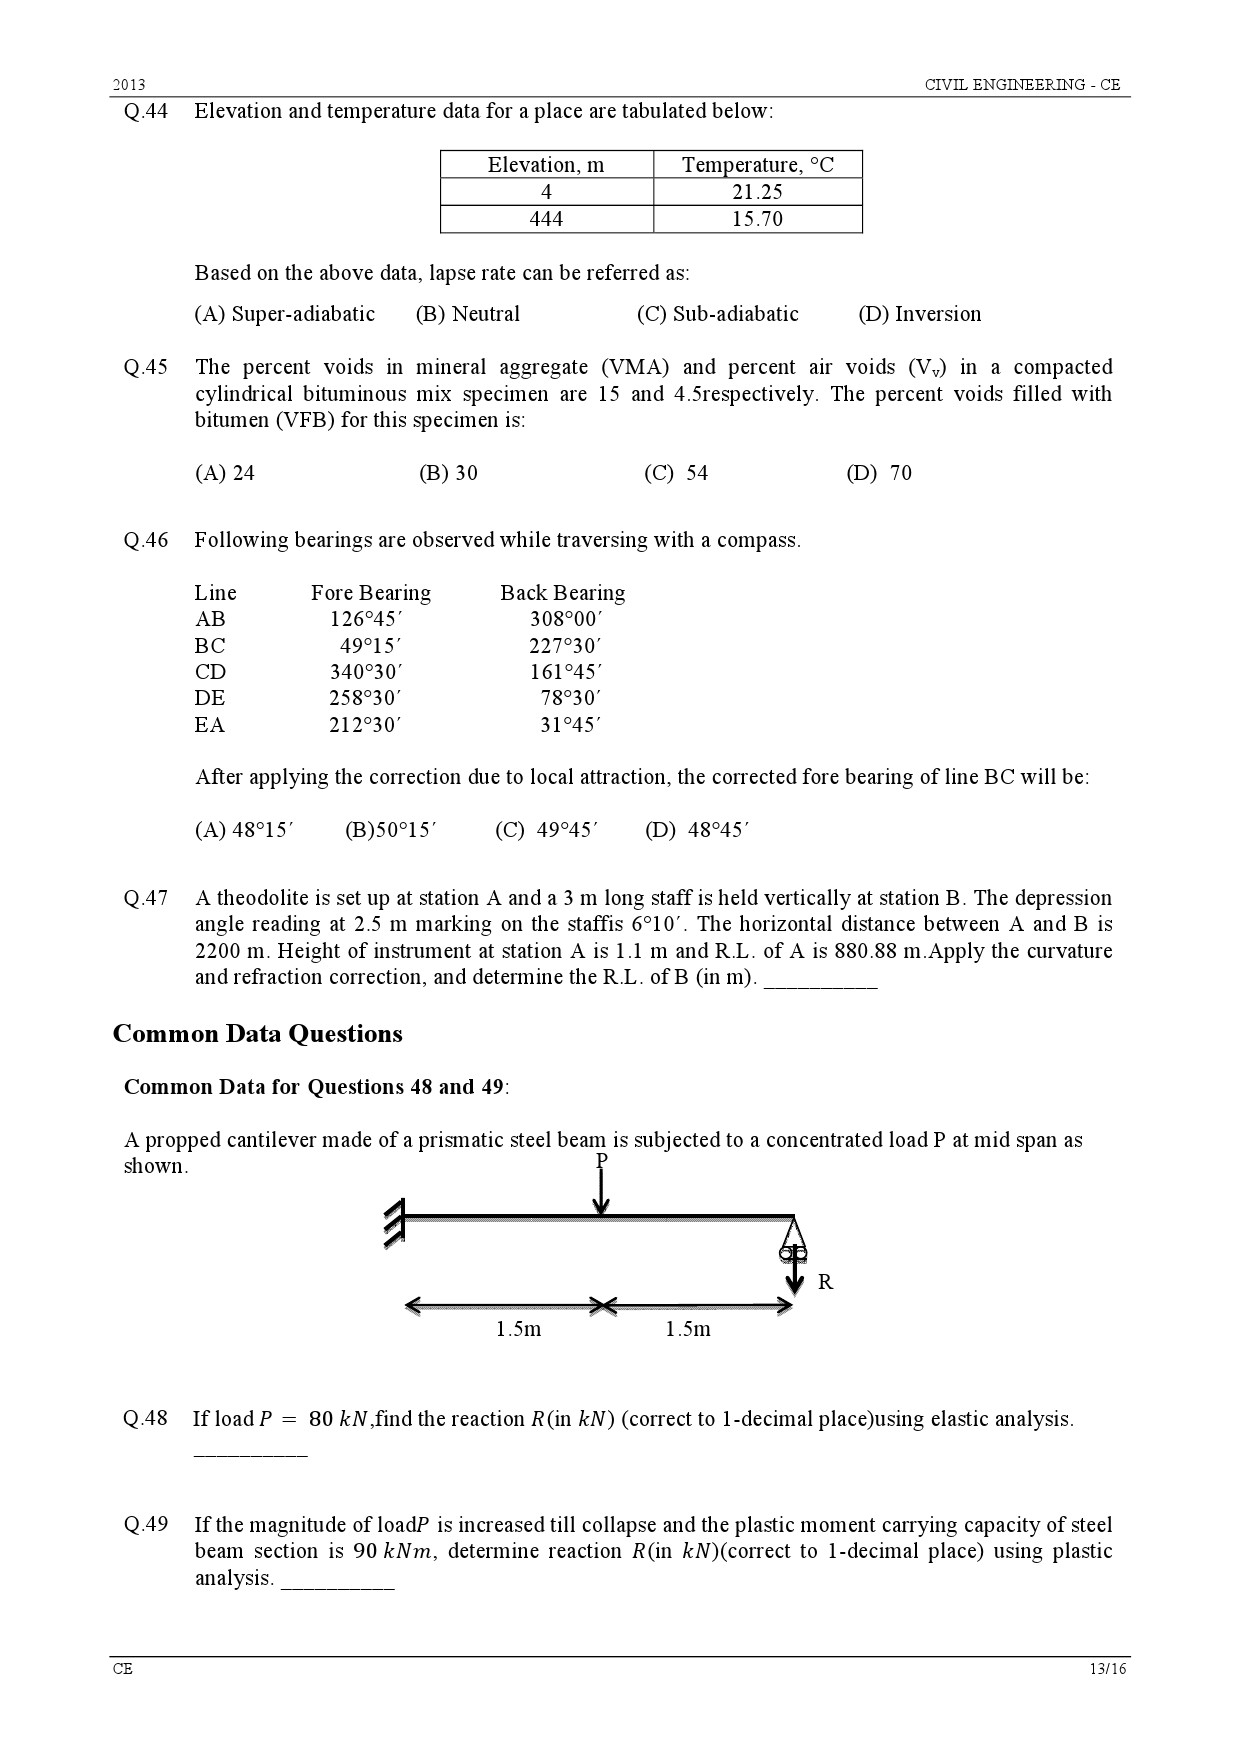 GATE Exam Question Paper 2013 Civil Engineering 13